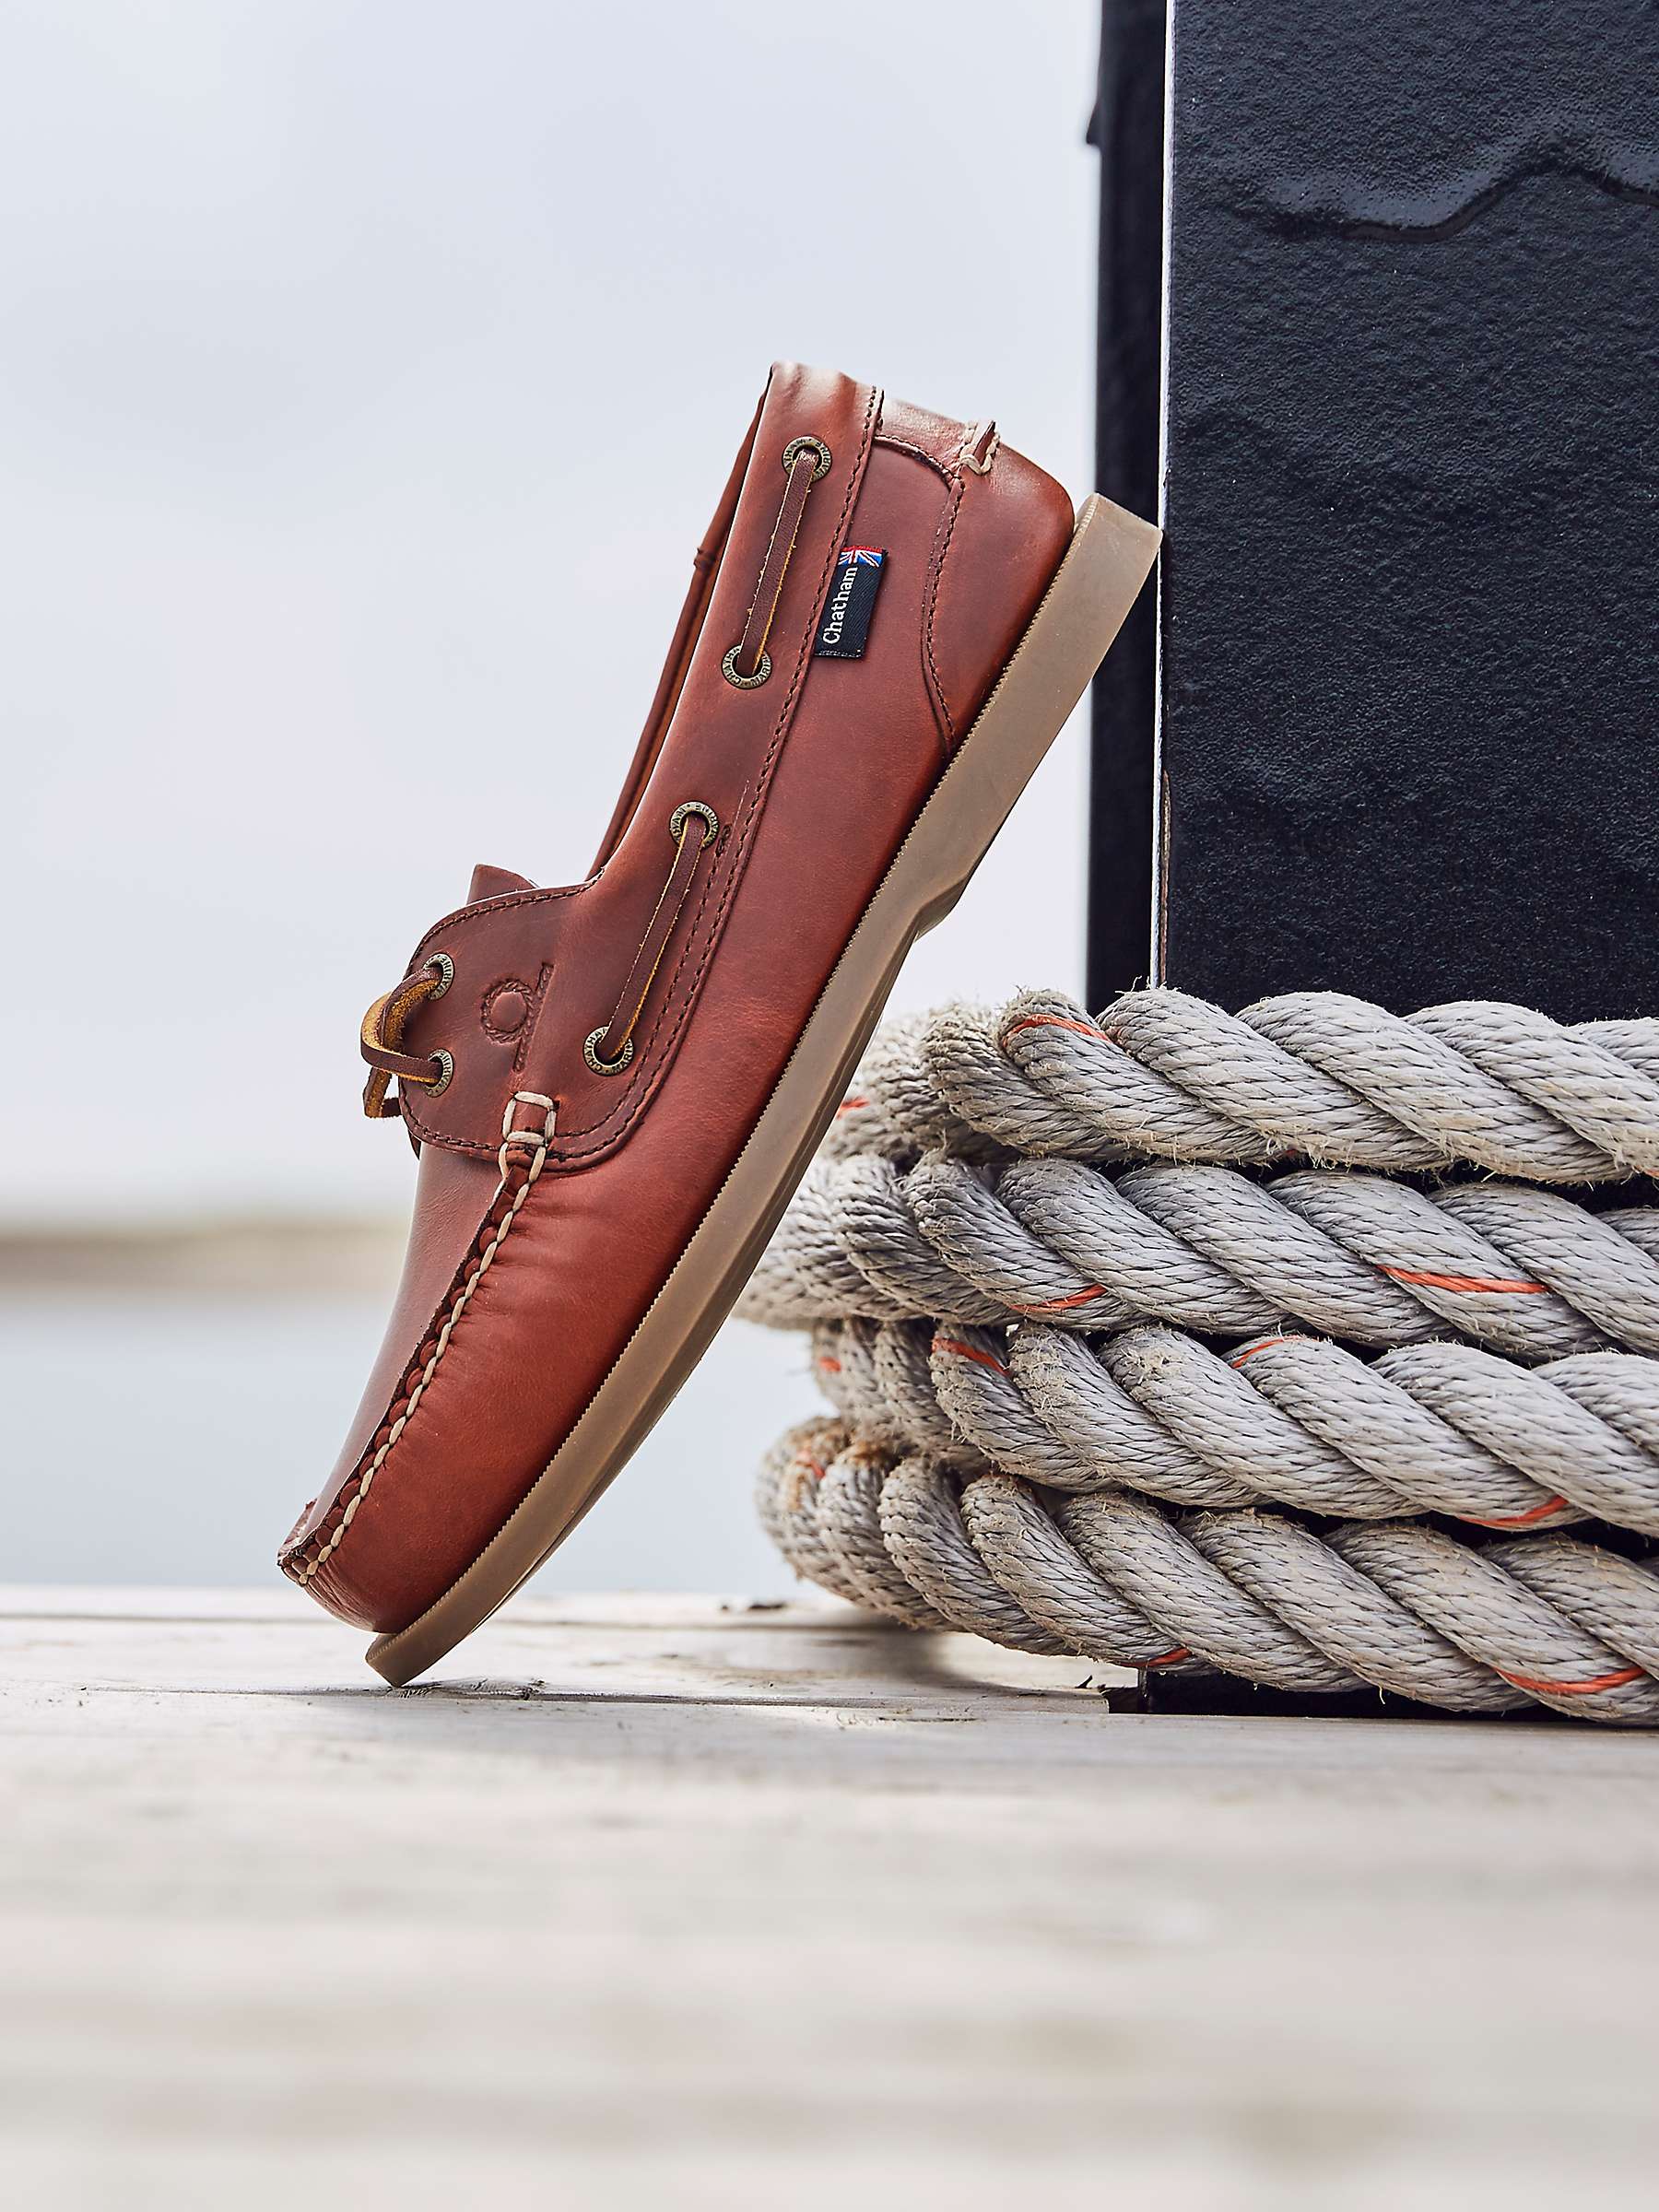 Buy Chatham Deck II G2 Leather Boat Shoes, Chestnut Online at johnlewis.com